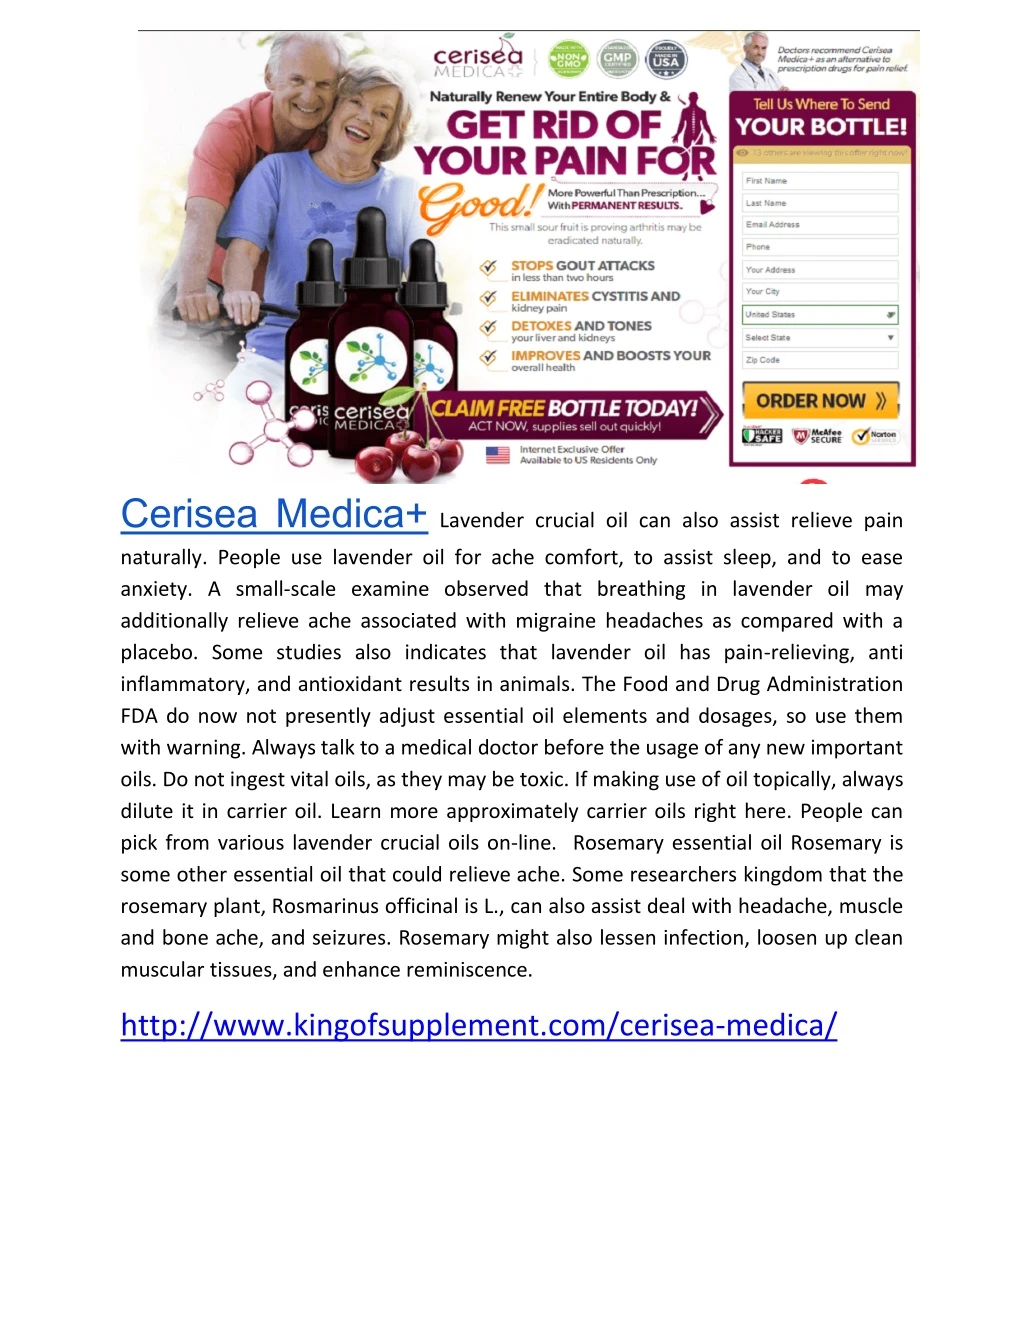 cerisea medica lavender crucial oil can also